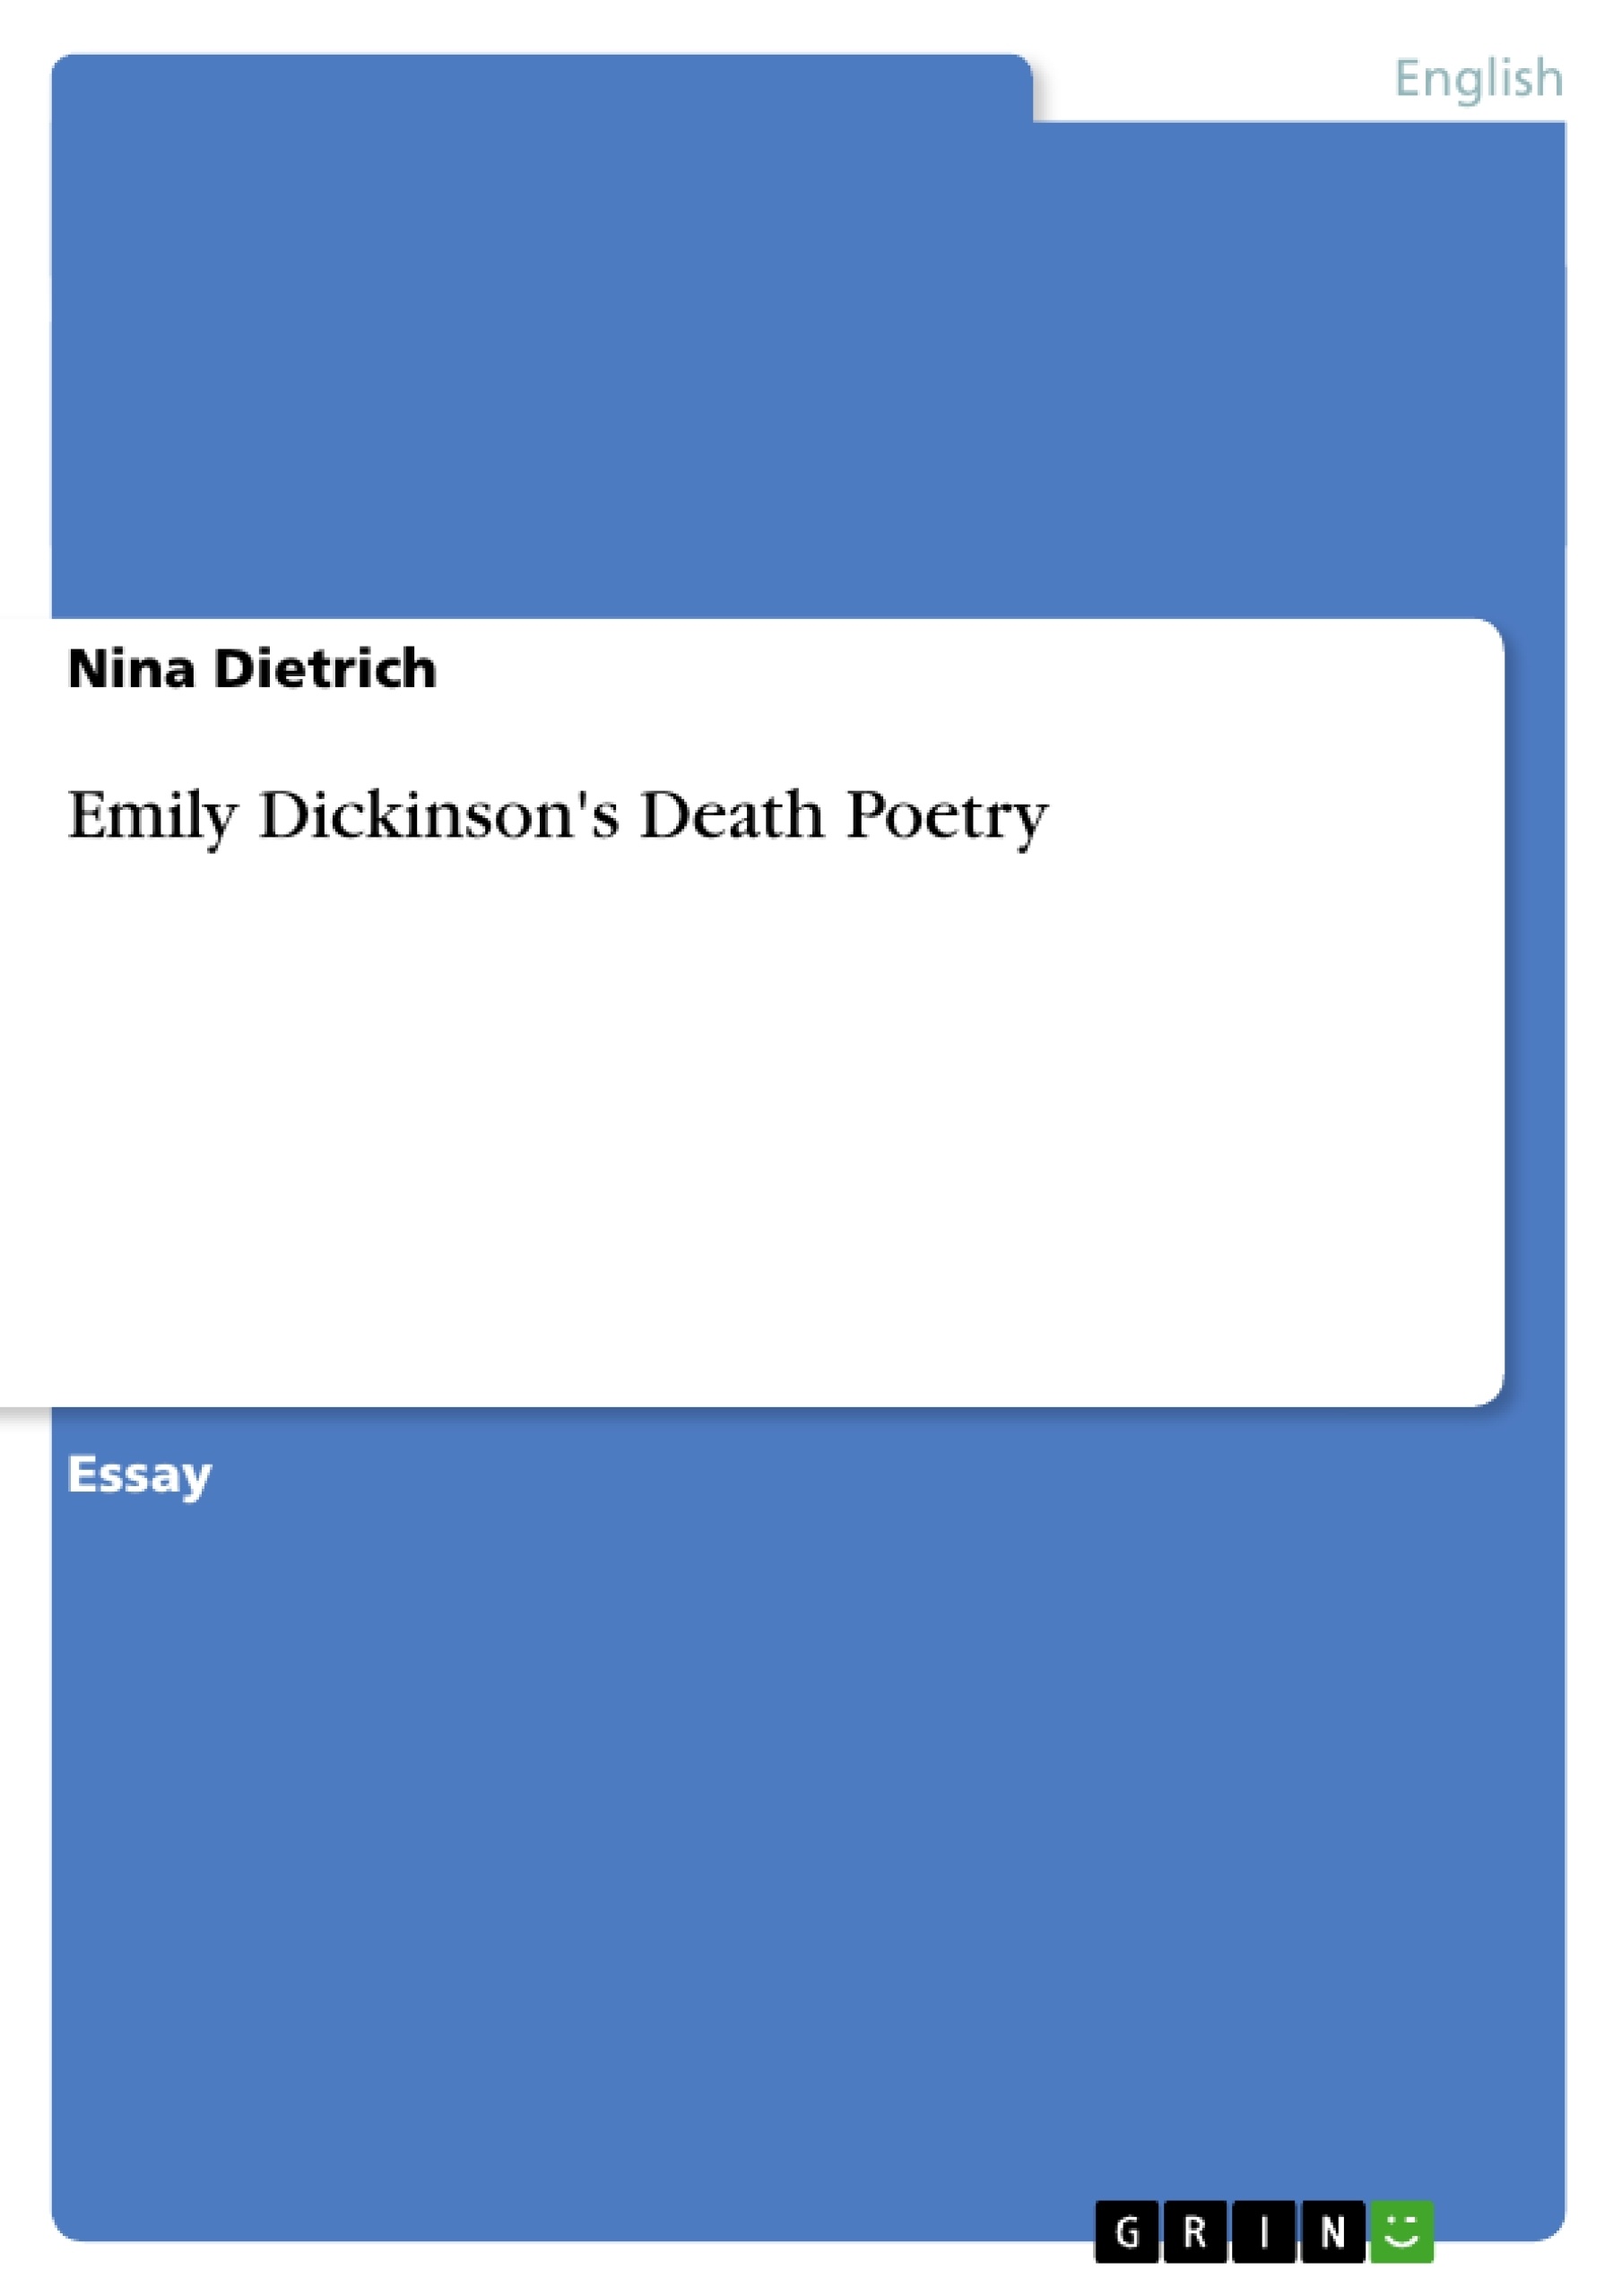 thesis on emily dickinson